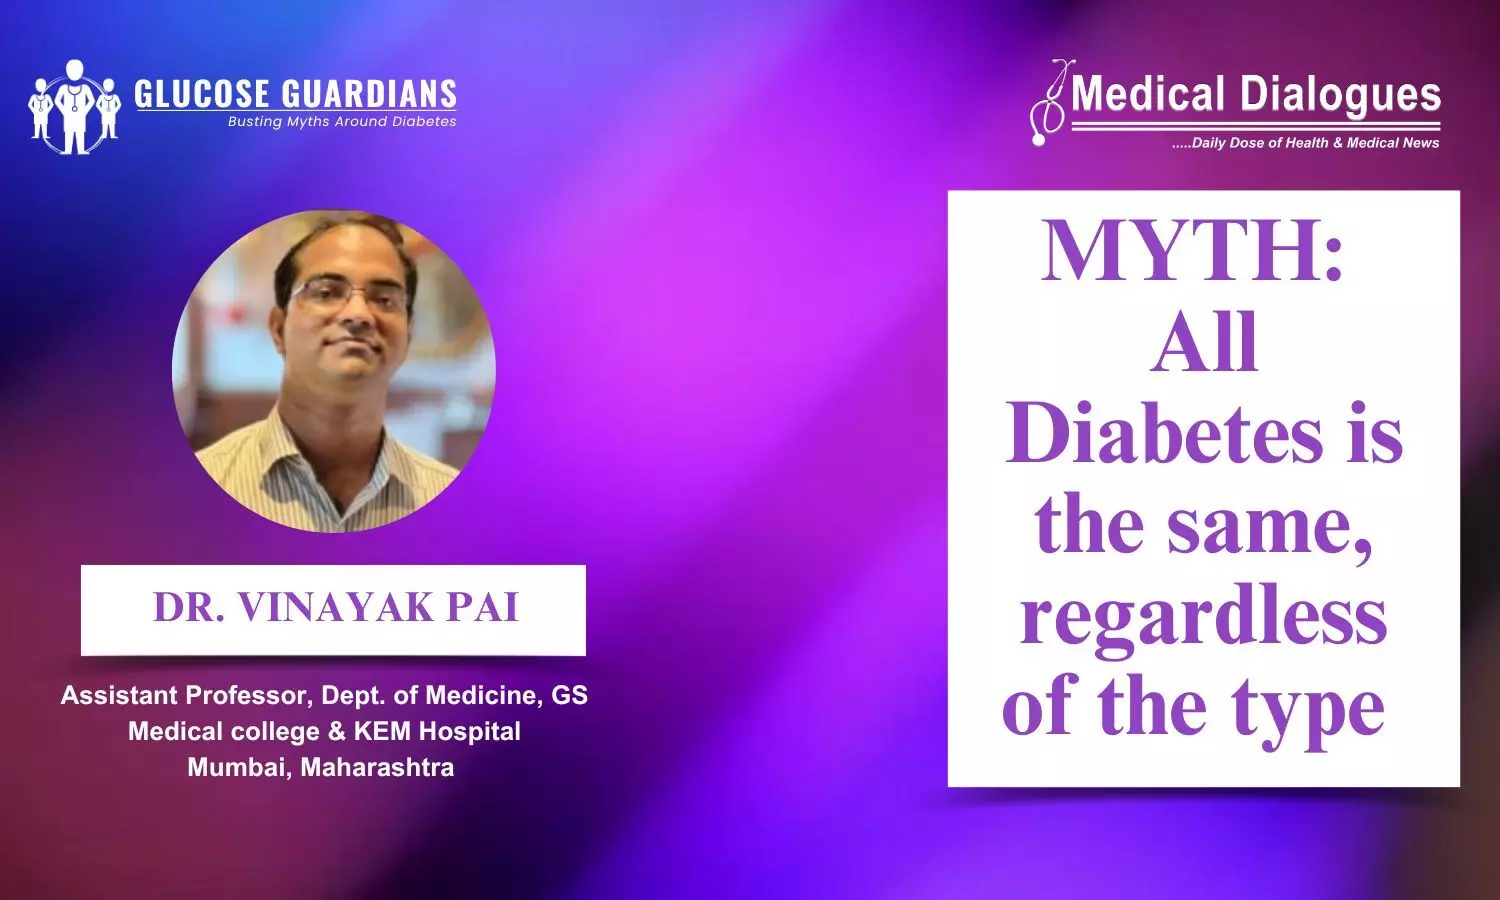 Is all diabetes same regardless of type? - Dr Vinayak Pai